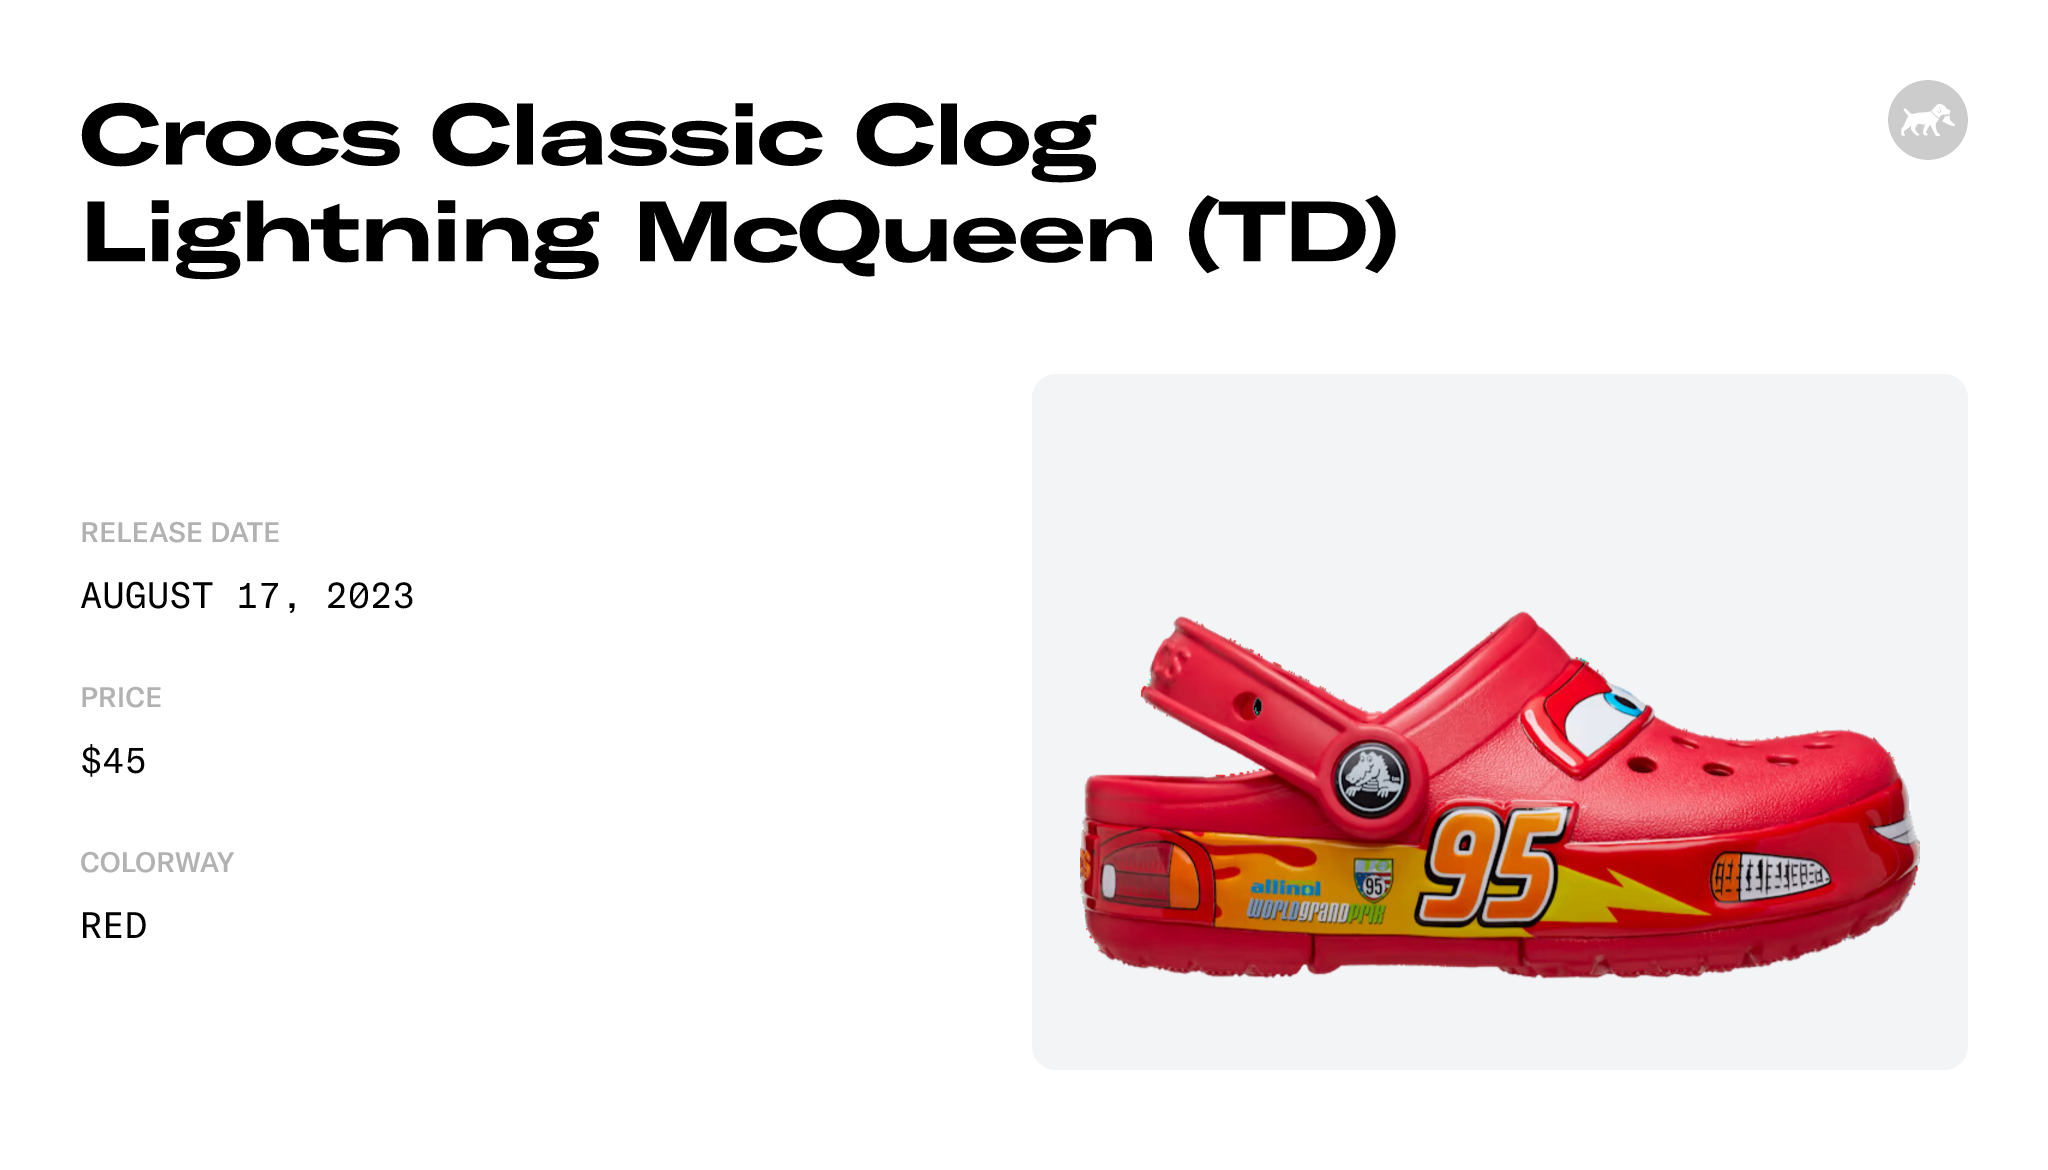 Crocs Classic Clog Lightning McQueen (TD) Raffles and Release Date